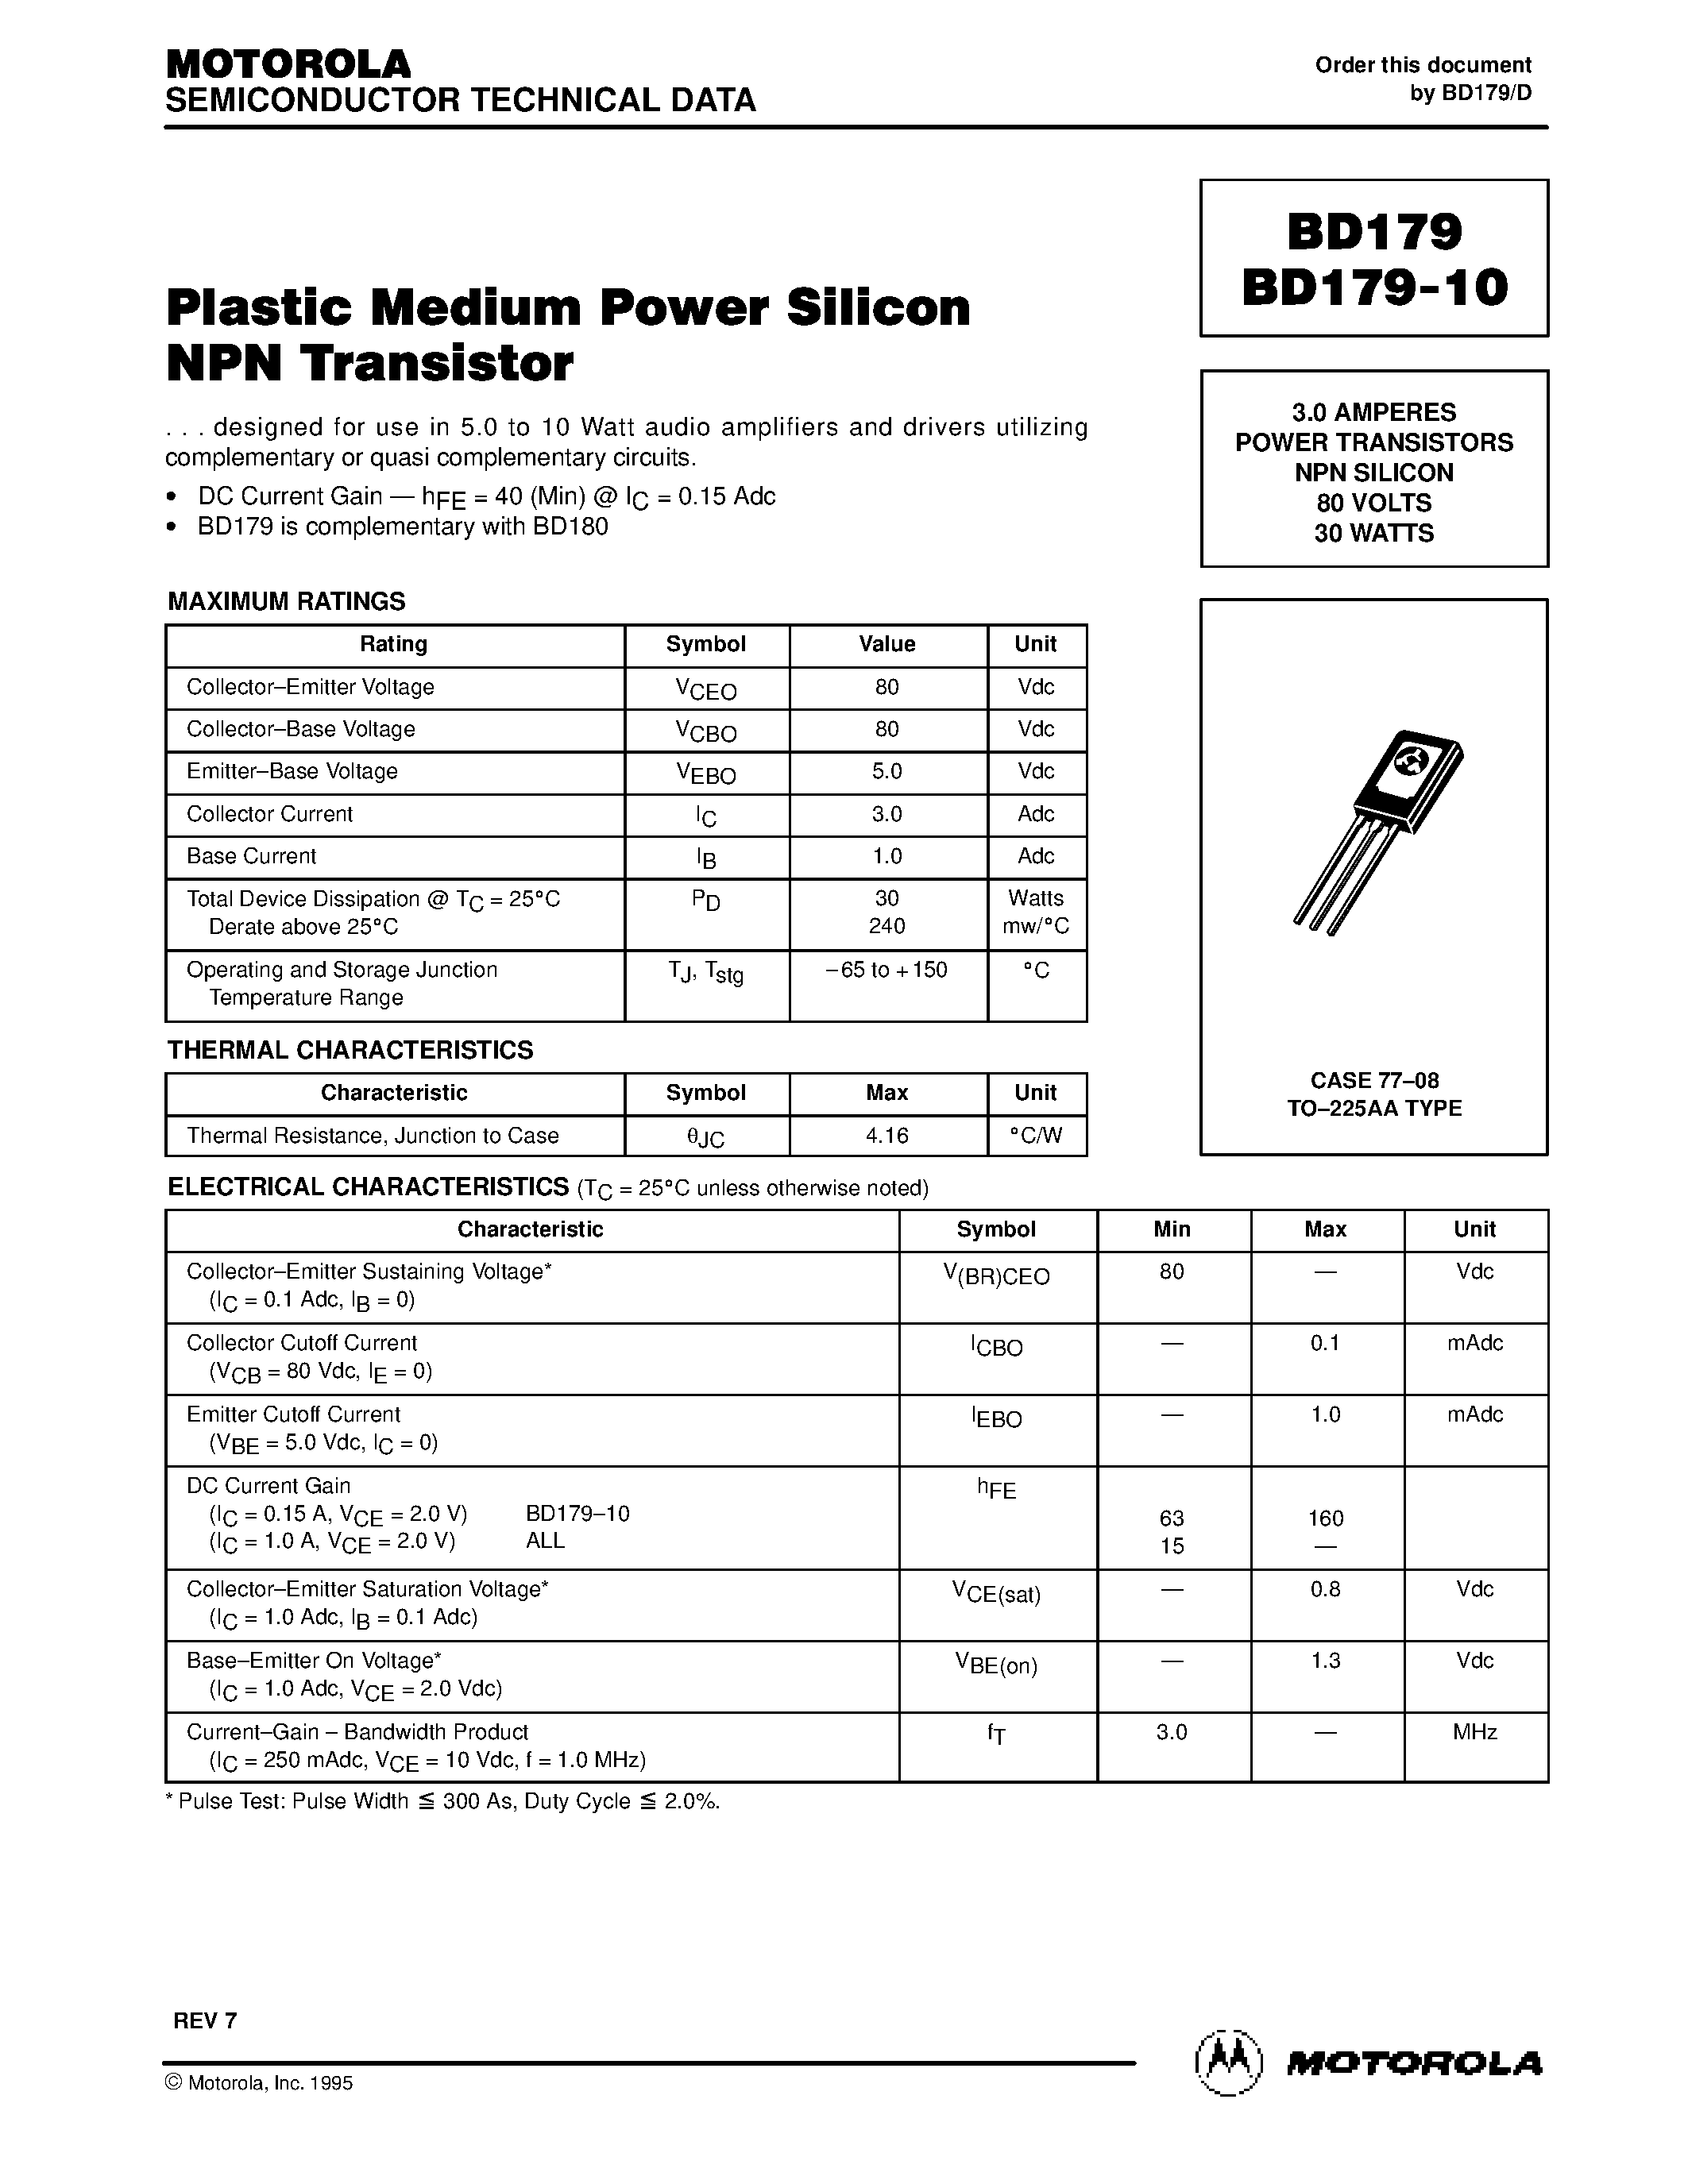 Datasheet BD179 - Plastic Medium Power Silicon NPNP Transistor page 1